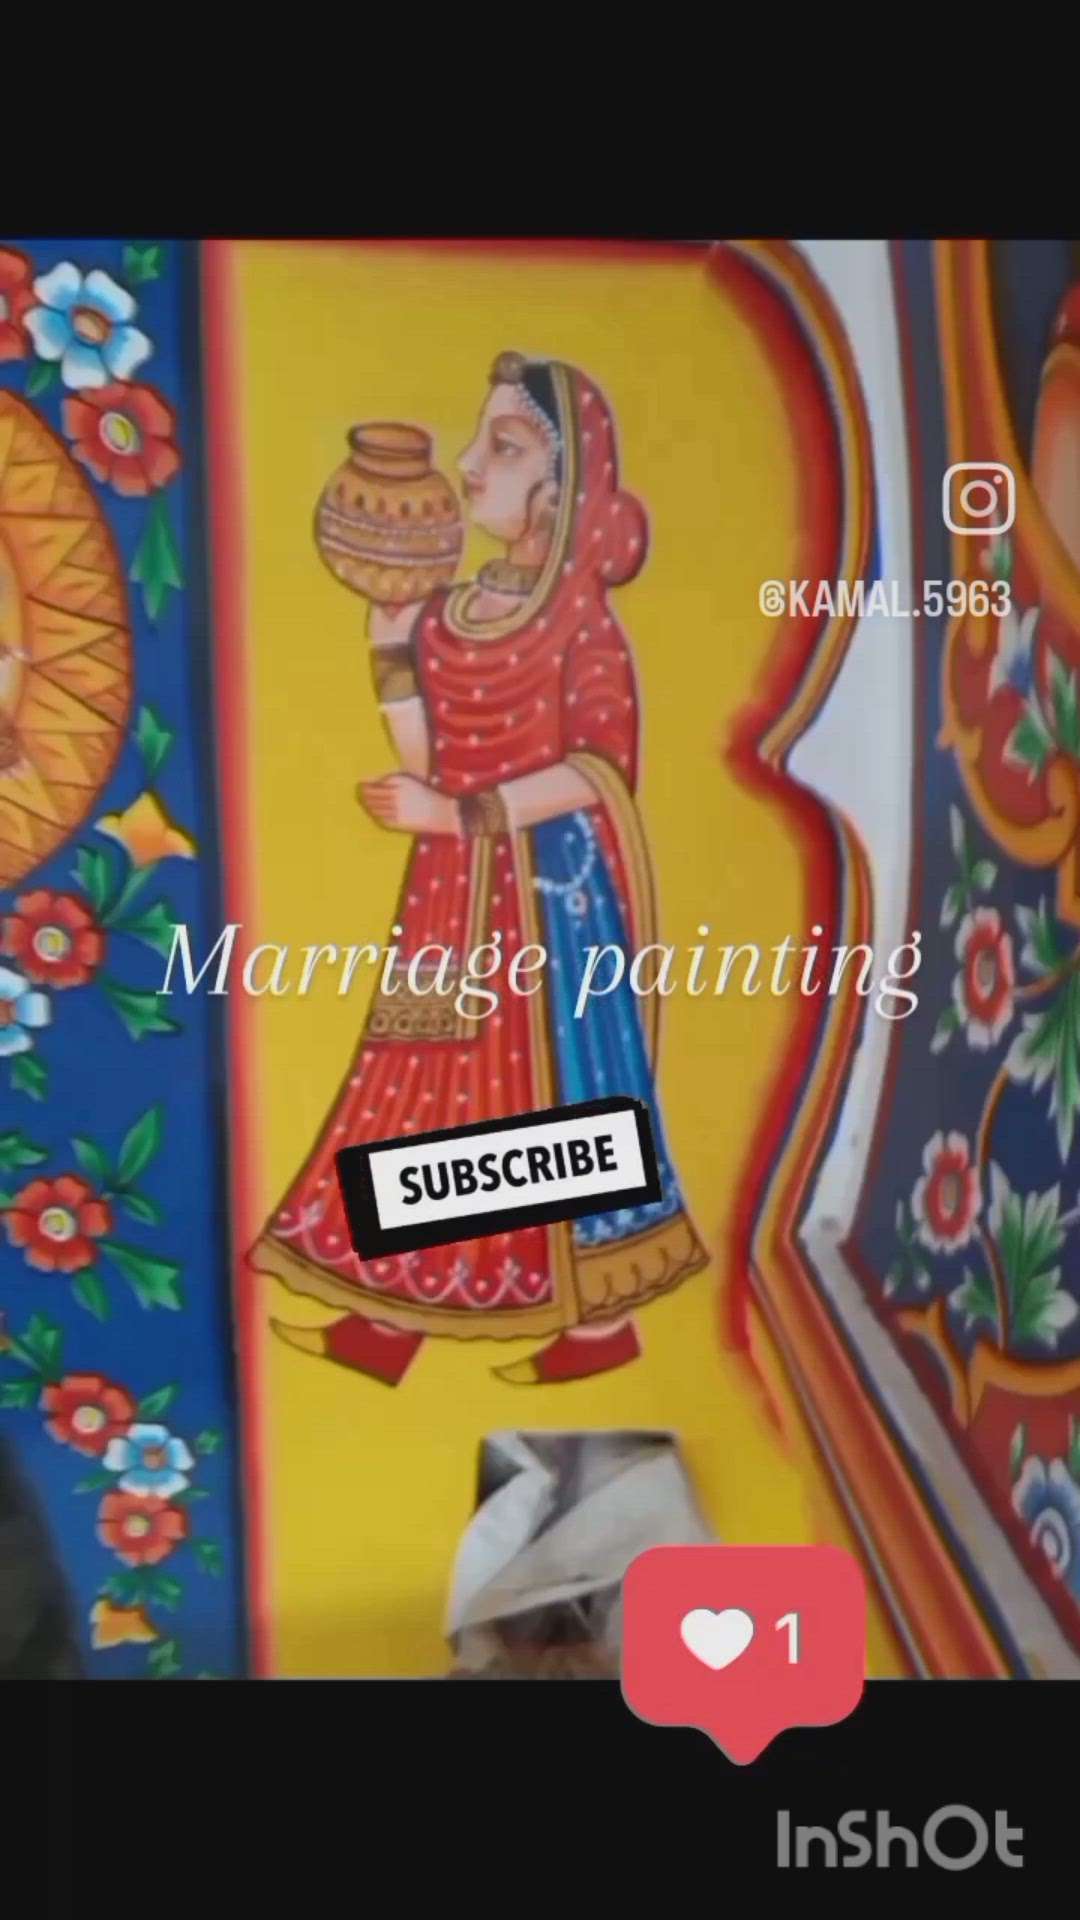 wall painting shadi chitram
marriage painting
pichawai painting